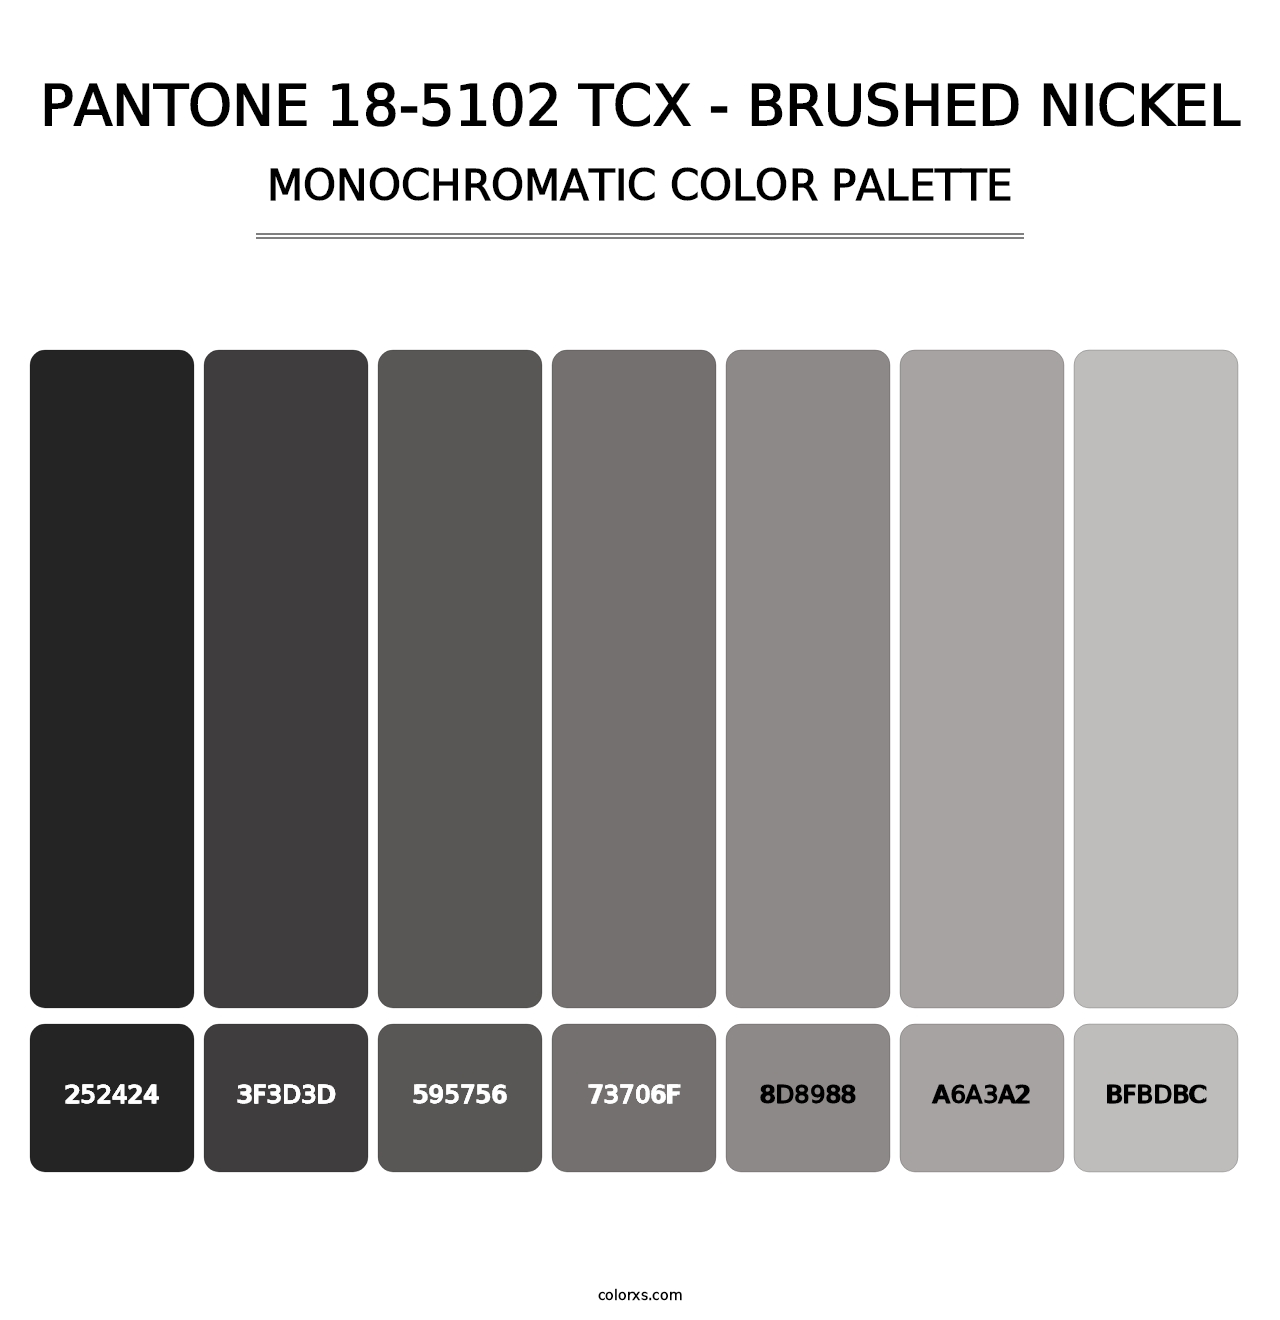 PANTONE 18-5102 TCX - Brushed Nickel - Monochromatic Color Palette